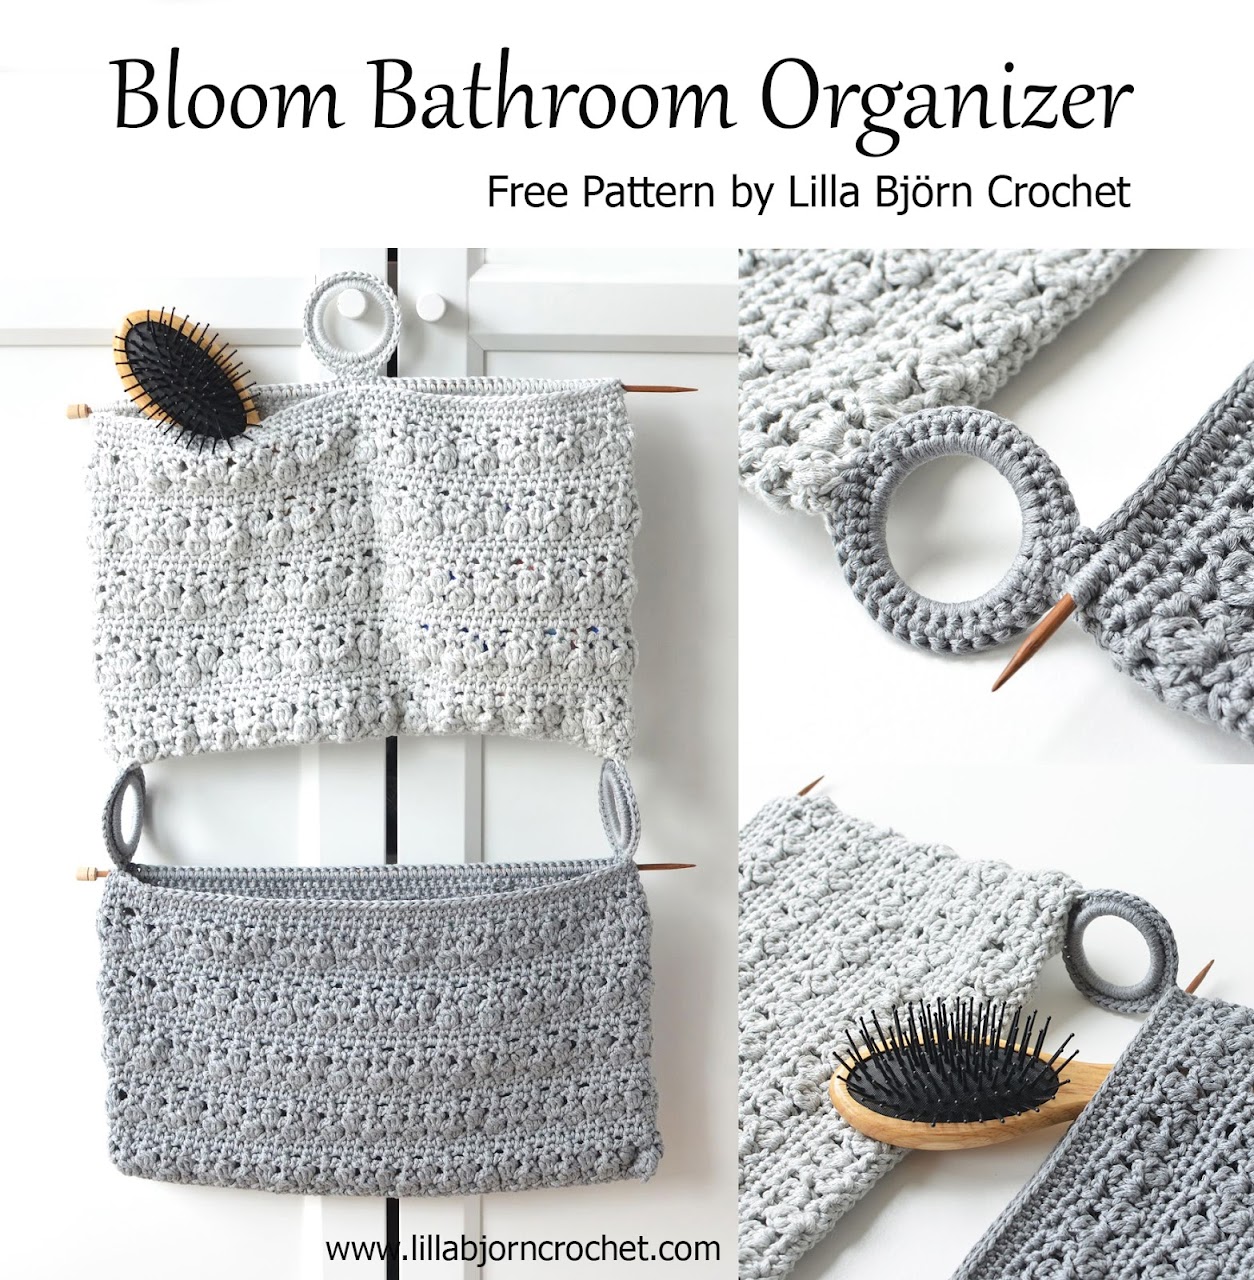 Bathroom Organizer - free crochet pattern by Lilla Bjorn Crochet